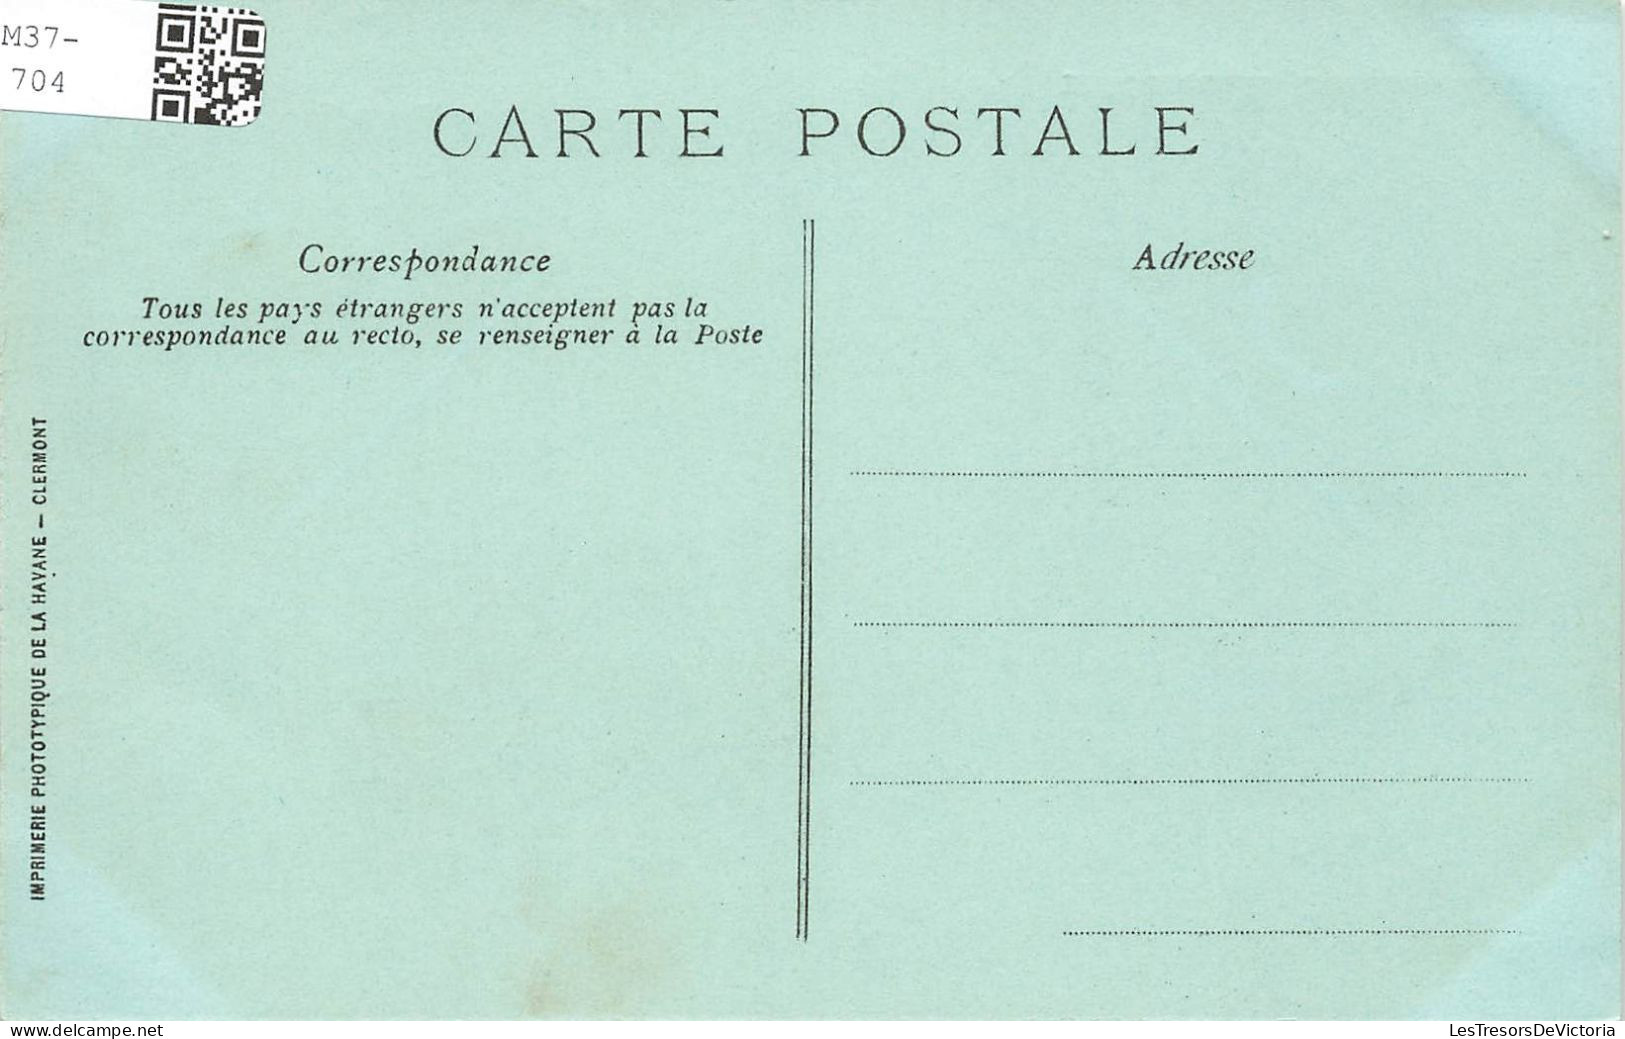 FRANCE - Volvic - Château De Tournoël - Carte Postale Ancienne - Volvic